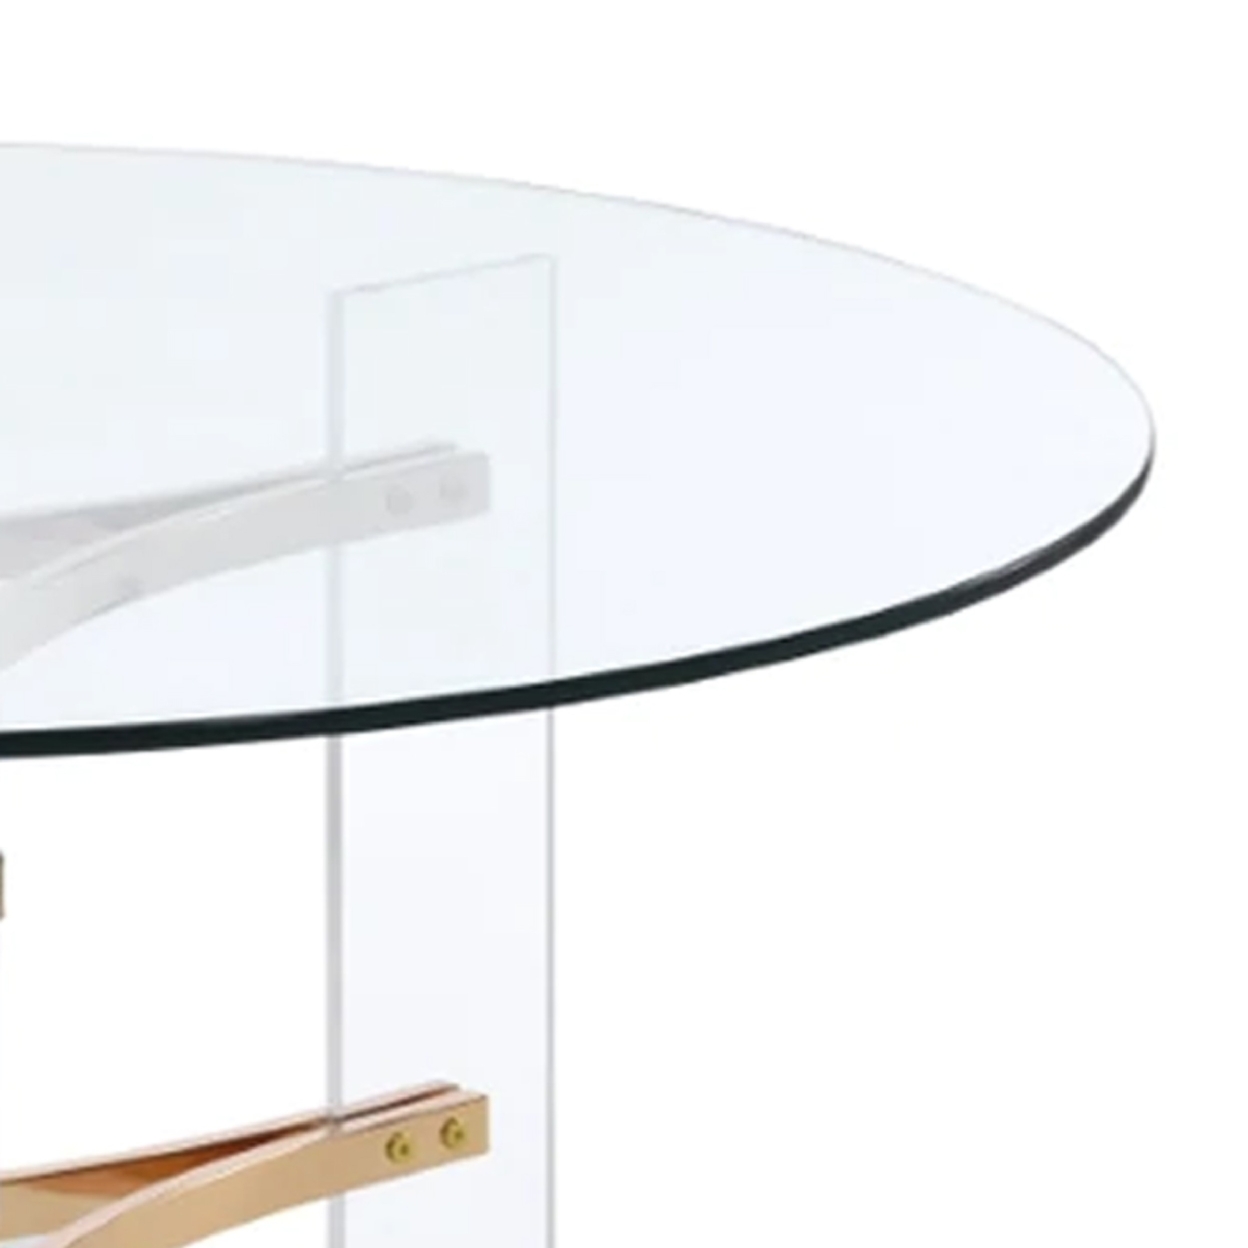 Hale 41 Inch Round Coffee Table, Glass Top, Acrylic Legs, Clear, Gold- Saltoro Sherpi